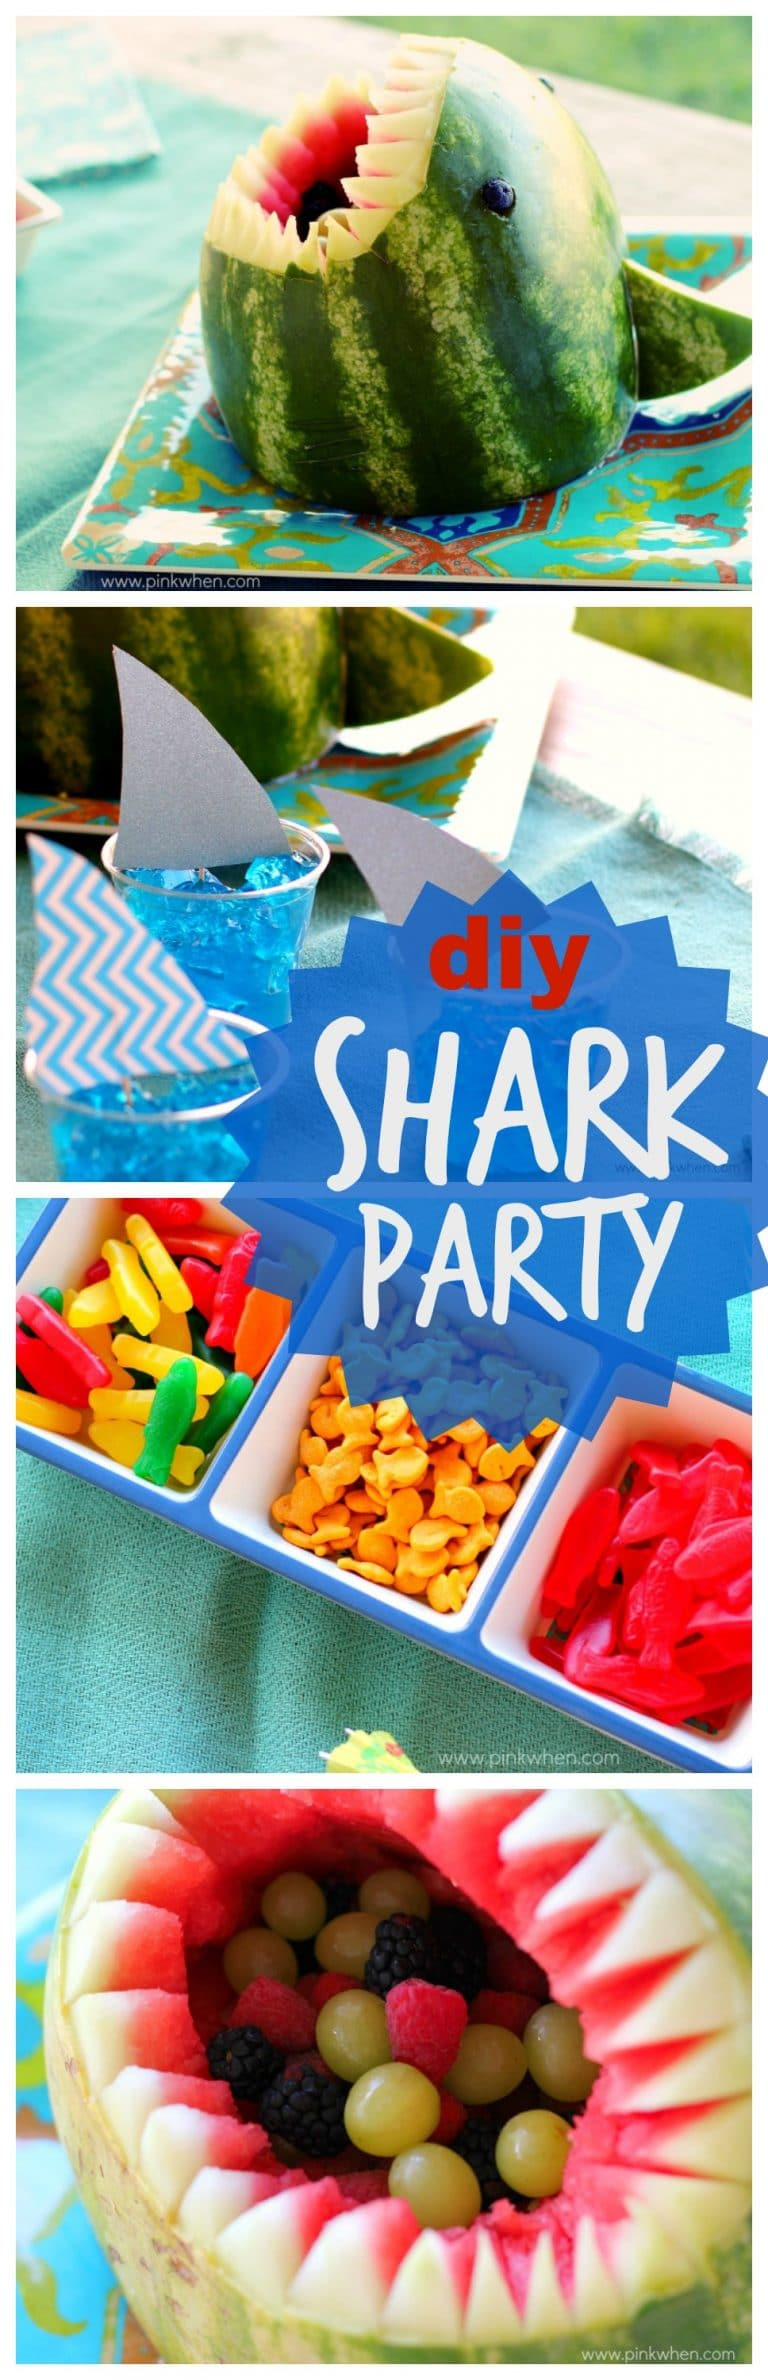 Shark Party Food Ideas
 Summertime Shark Party PinkWhen